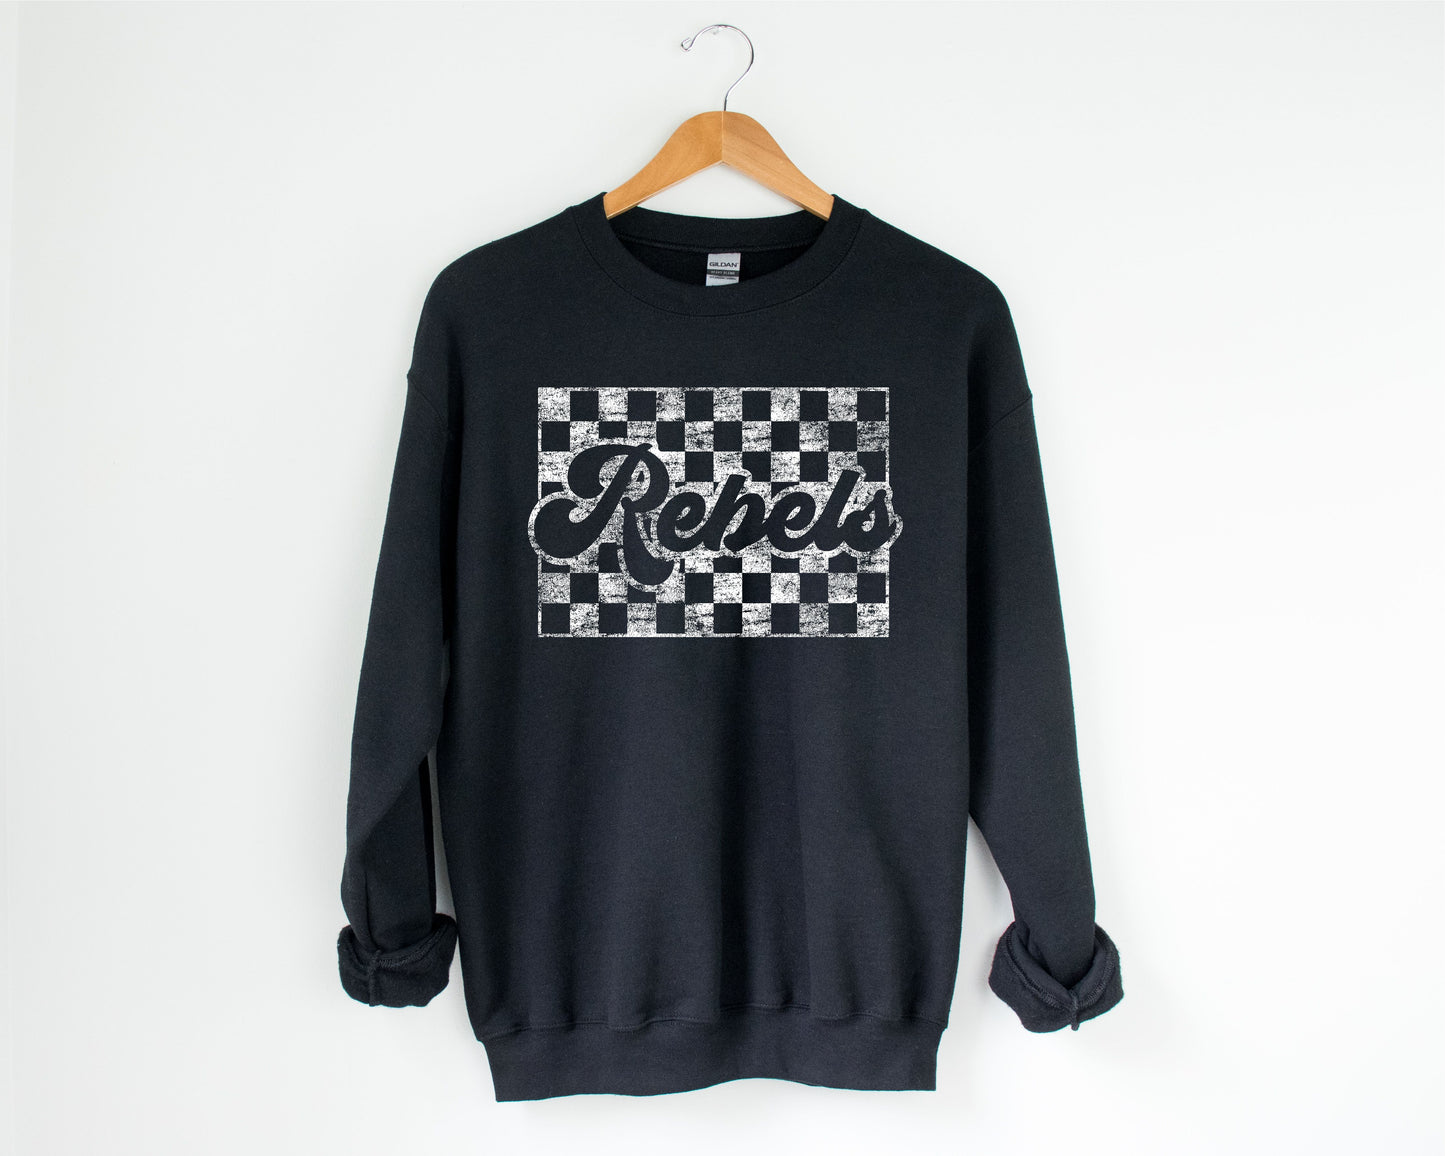 Rebels Checkered Sweatshirt